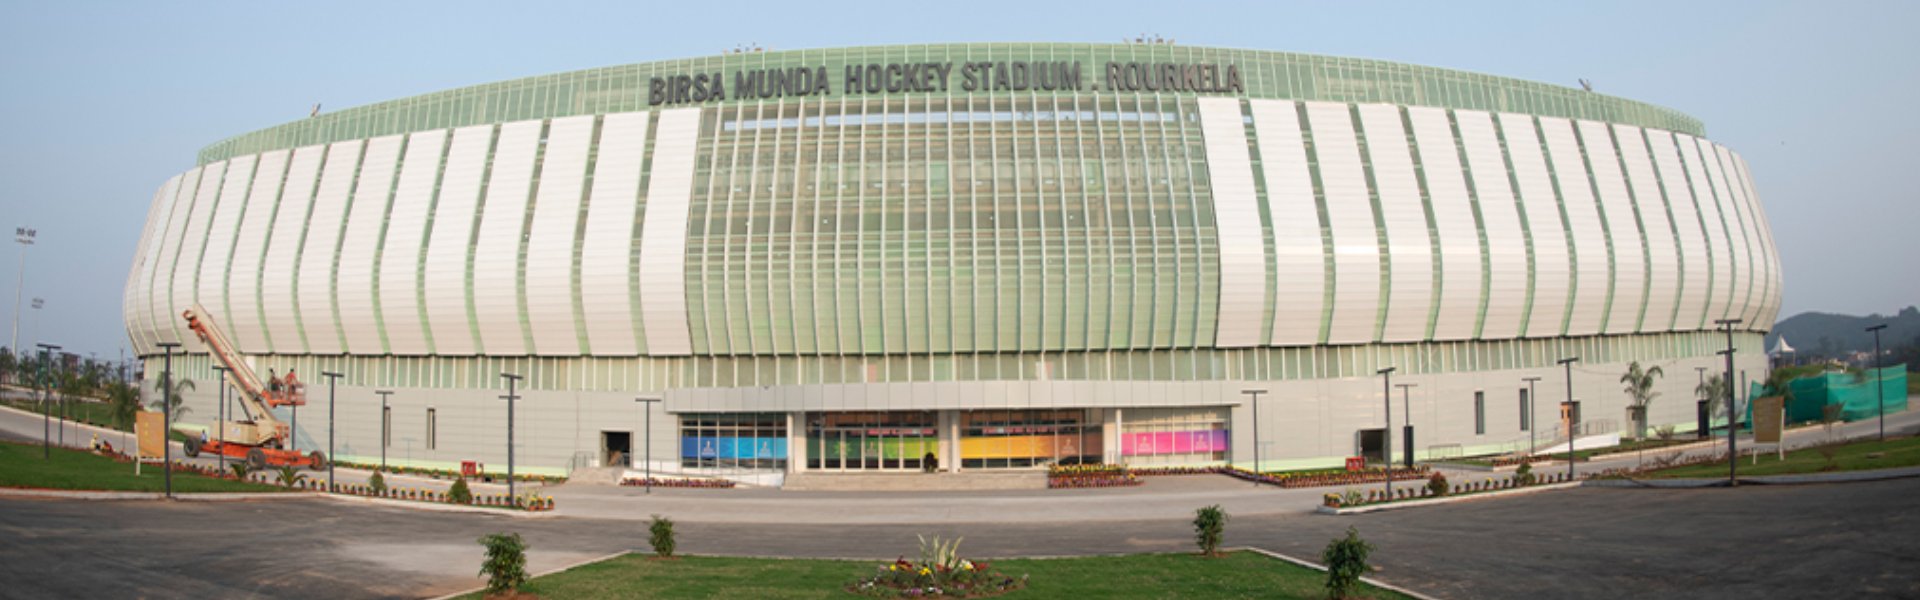 Birsa Munda International Hockey Stadium: A Crown Jewel of Indian Sports